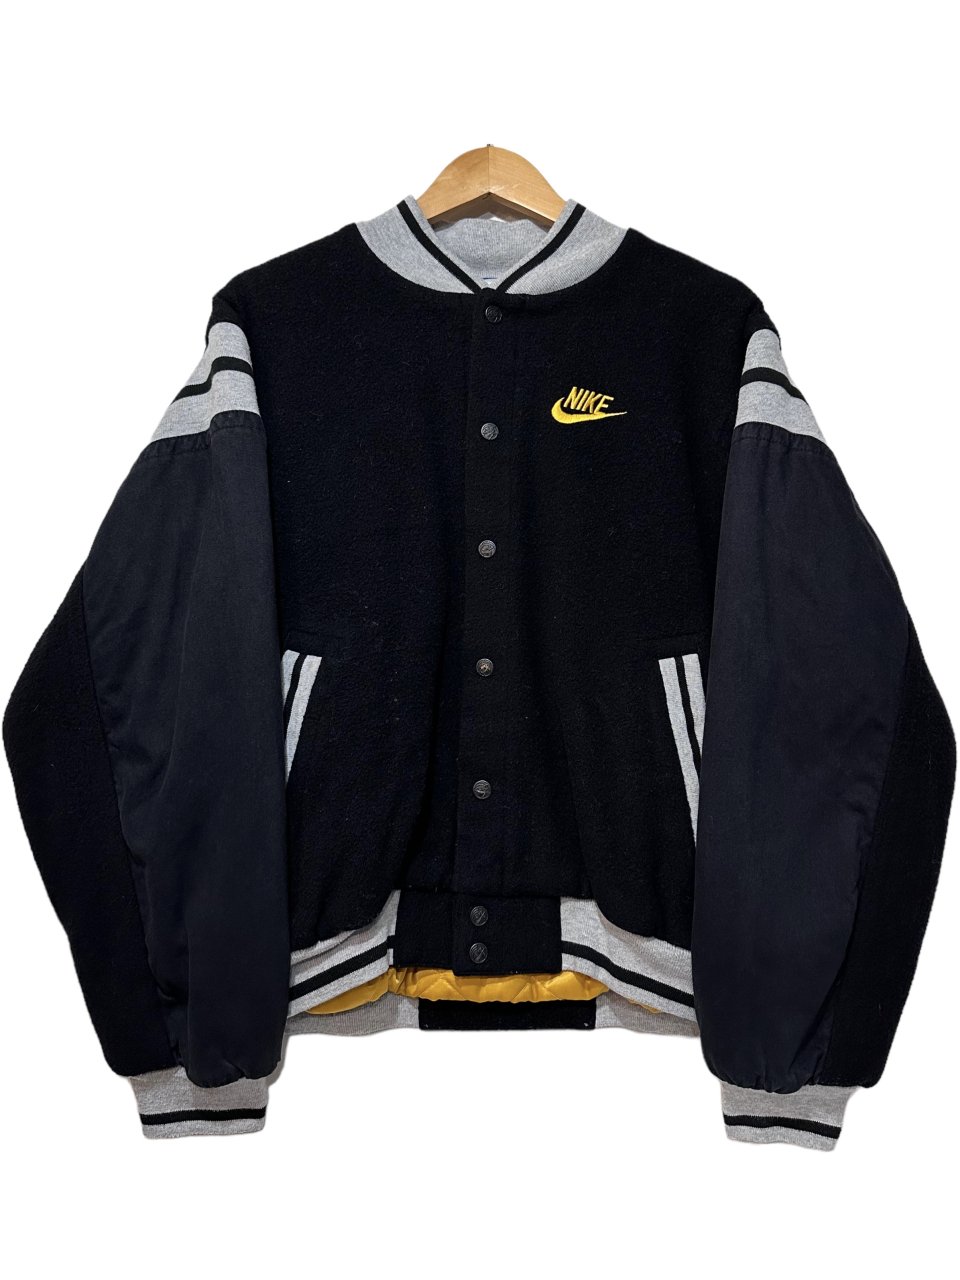 nike versity jacket スタジャン90s-